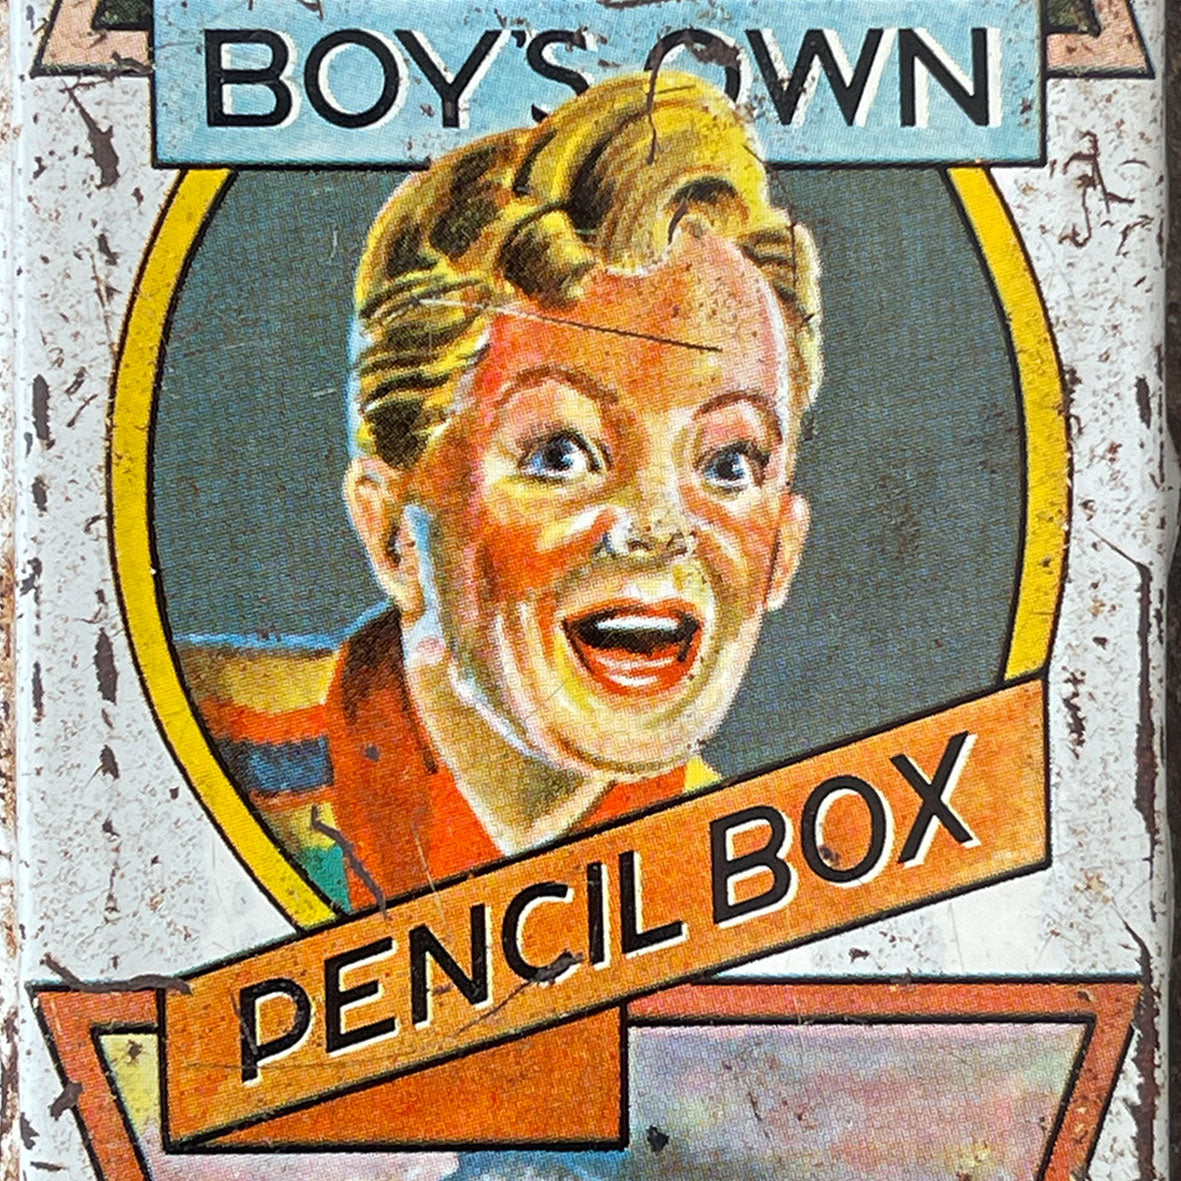 A Vintage Boy's Own Pencil Box